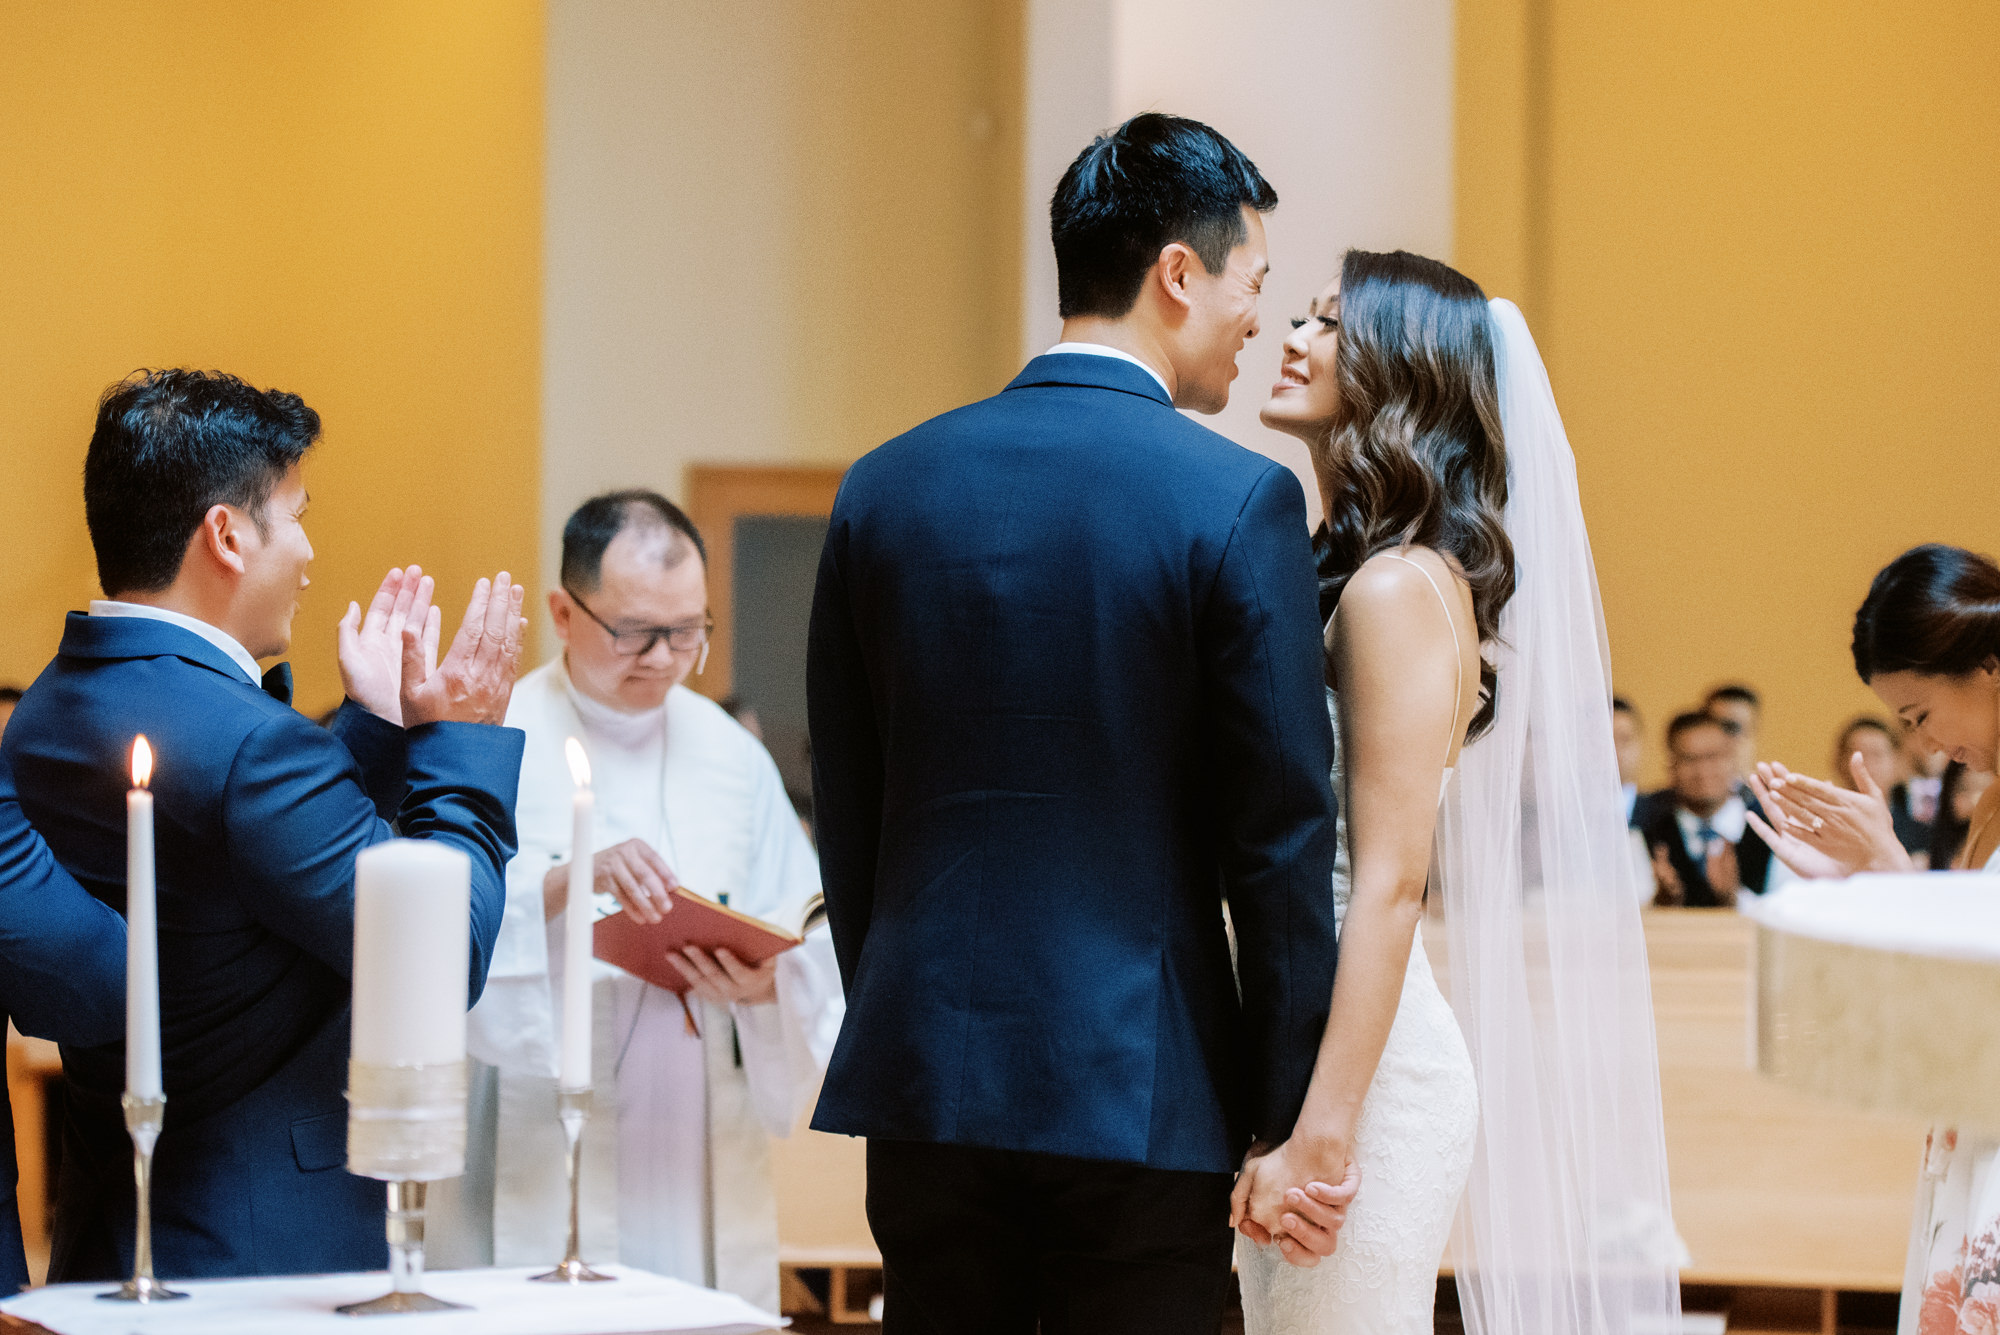 St Anne's Catholic Church wedding: The kiss